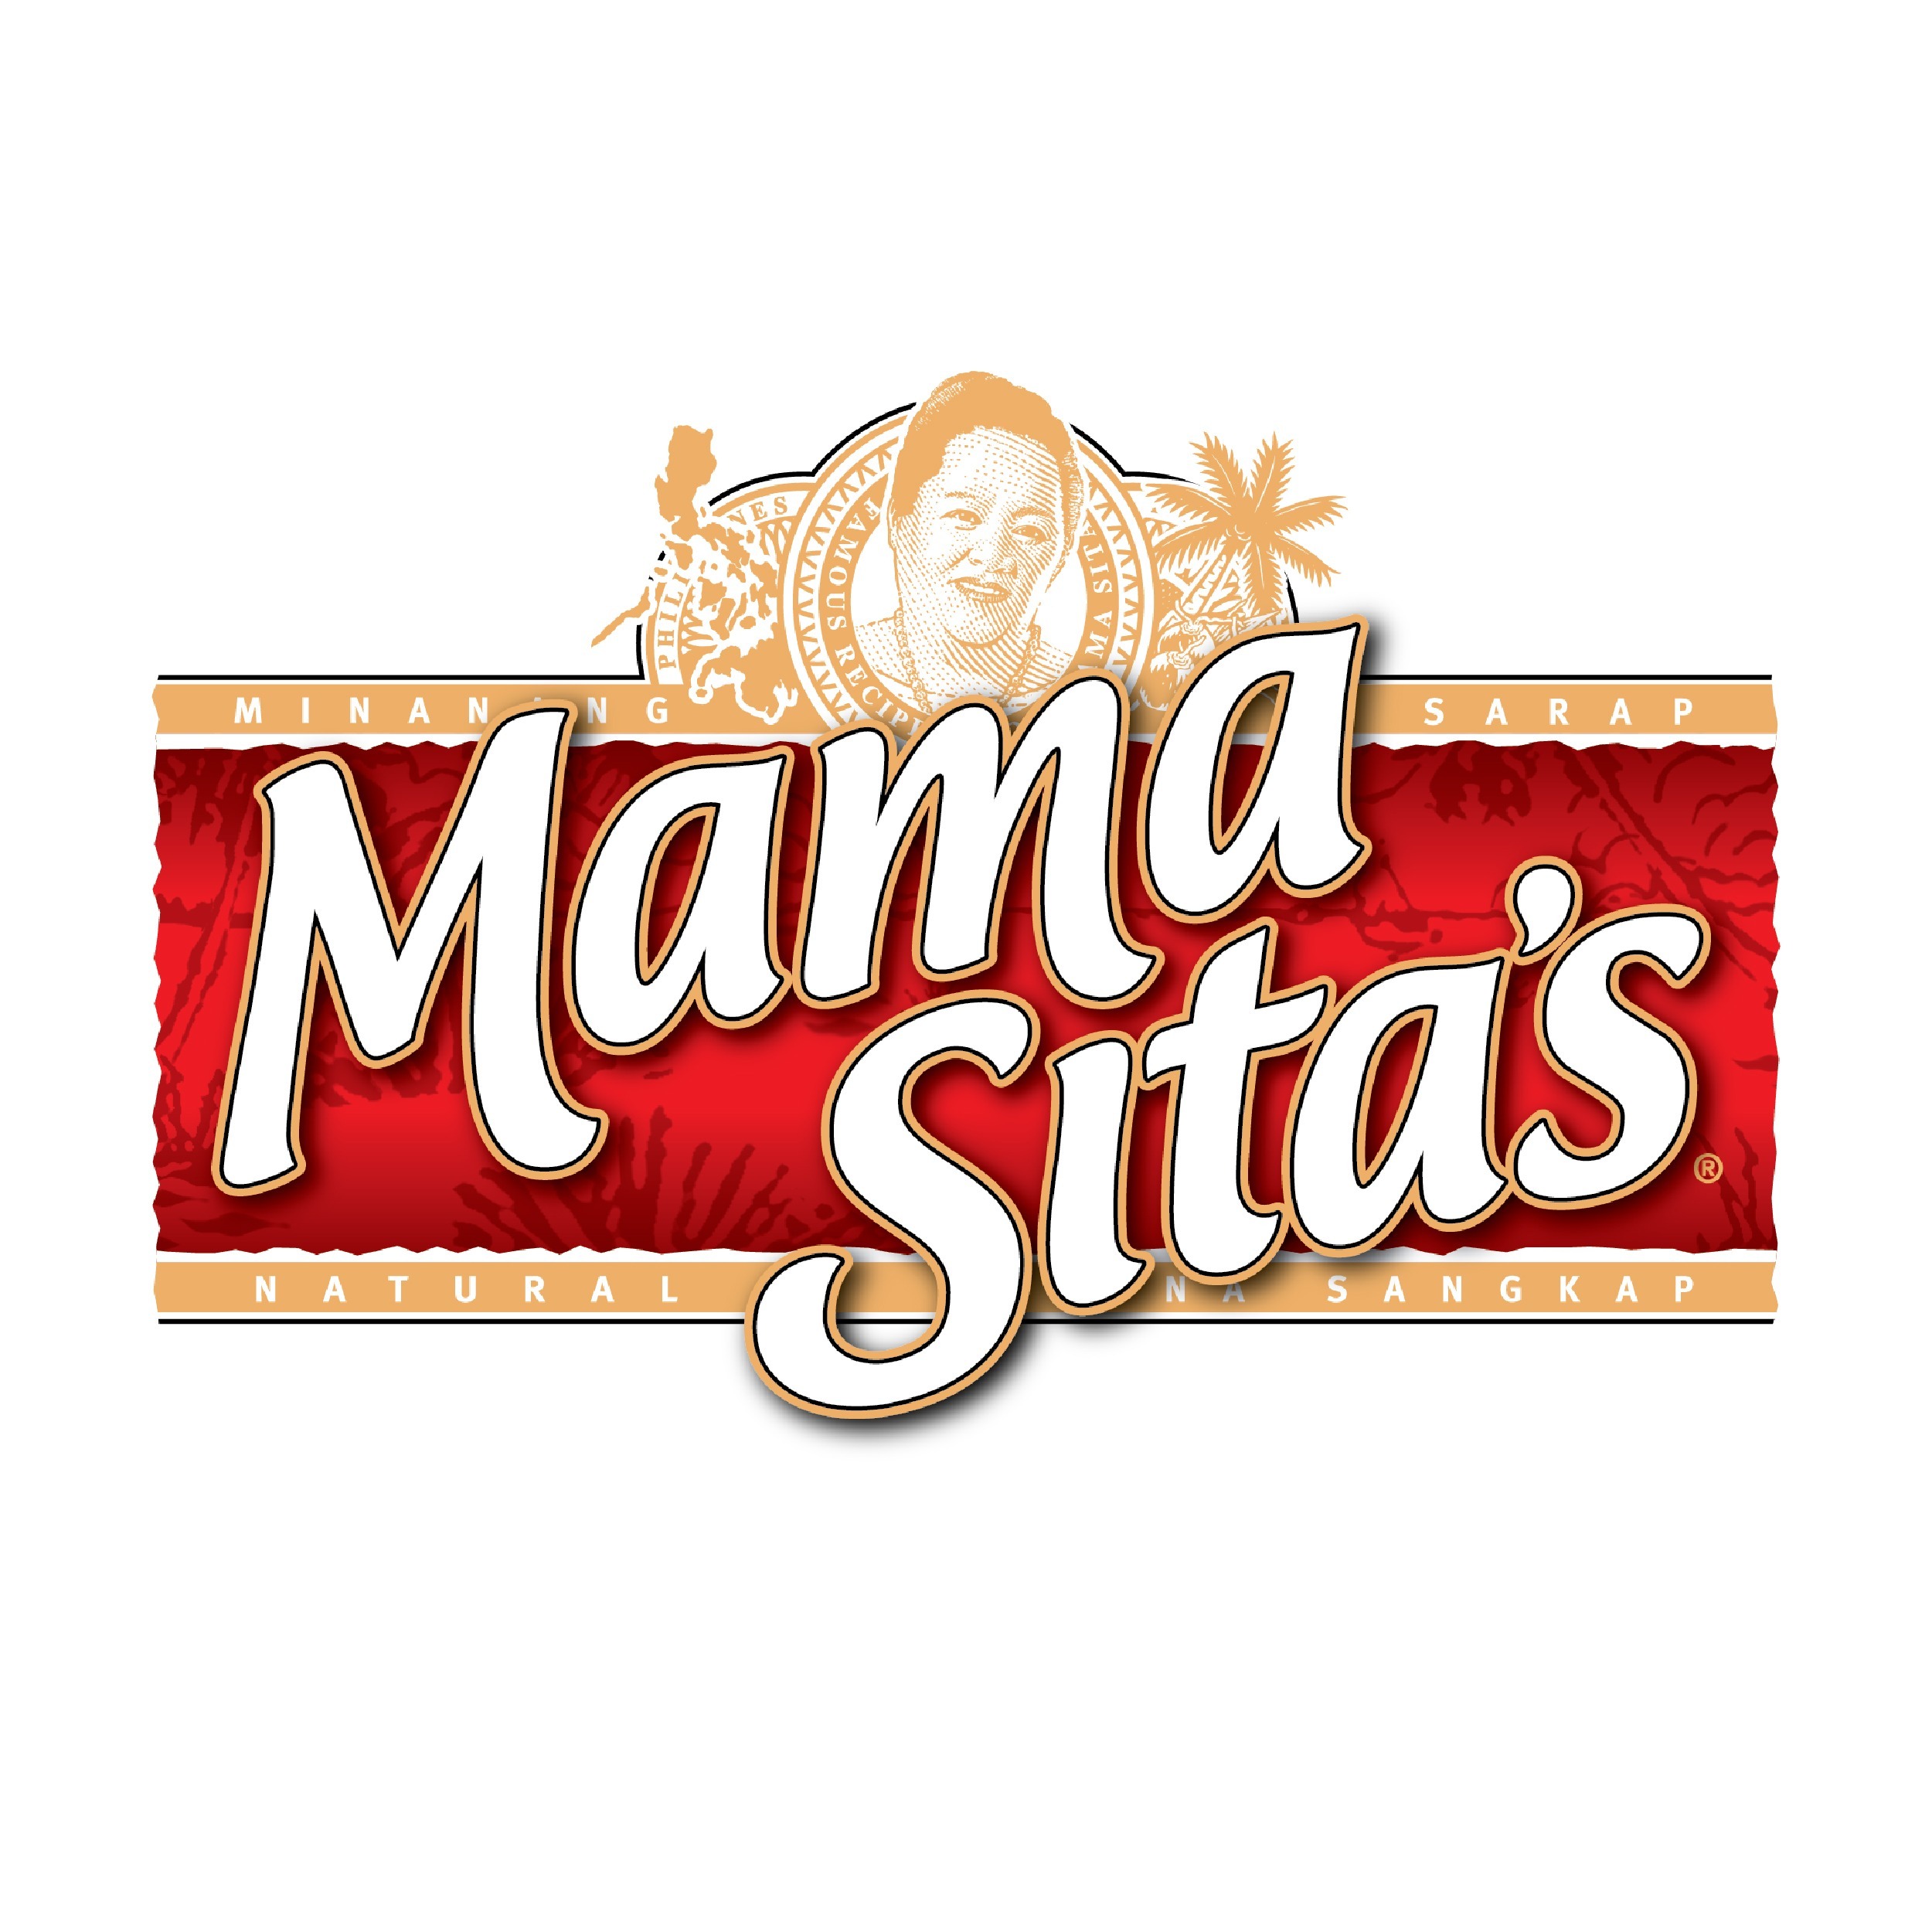 Shop online with MAMA_SITA'S now! Visit MAMA_SITA'S on Lazada.